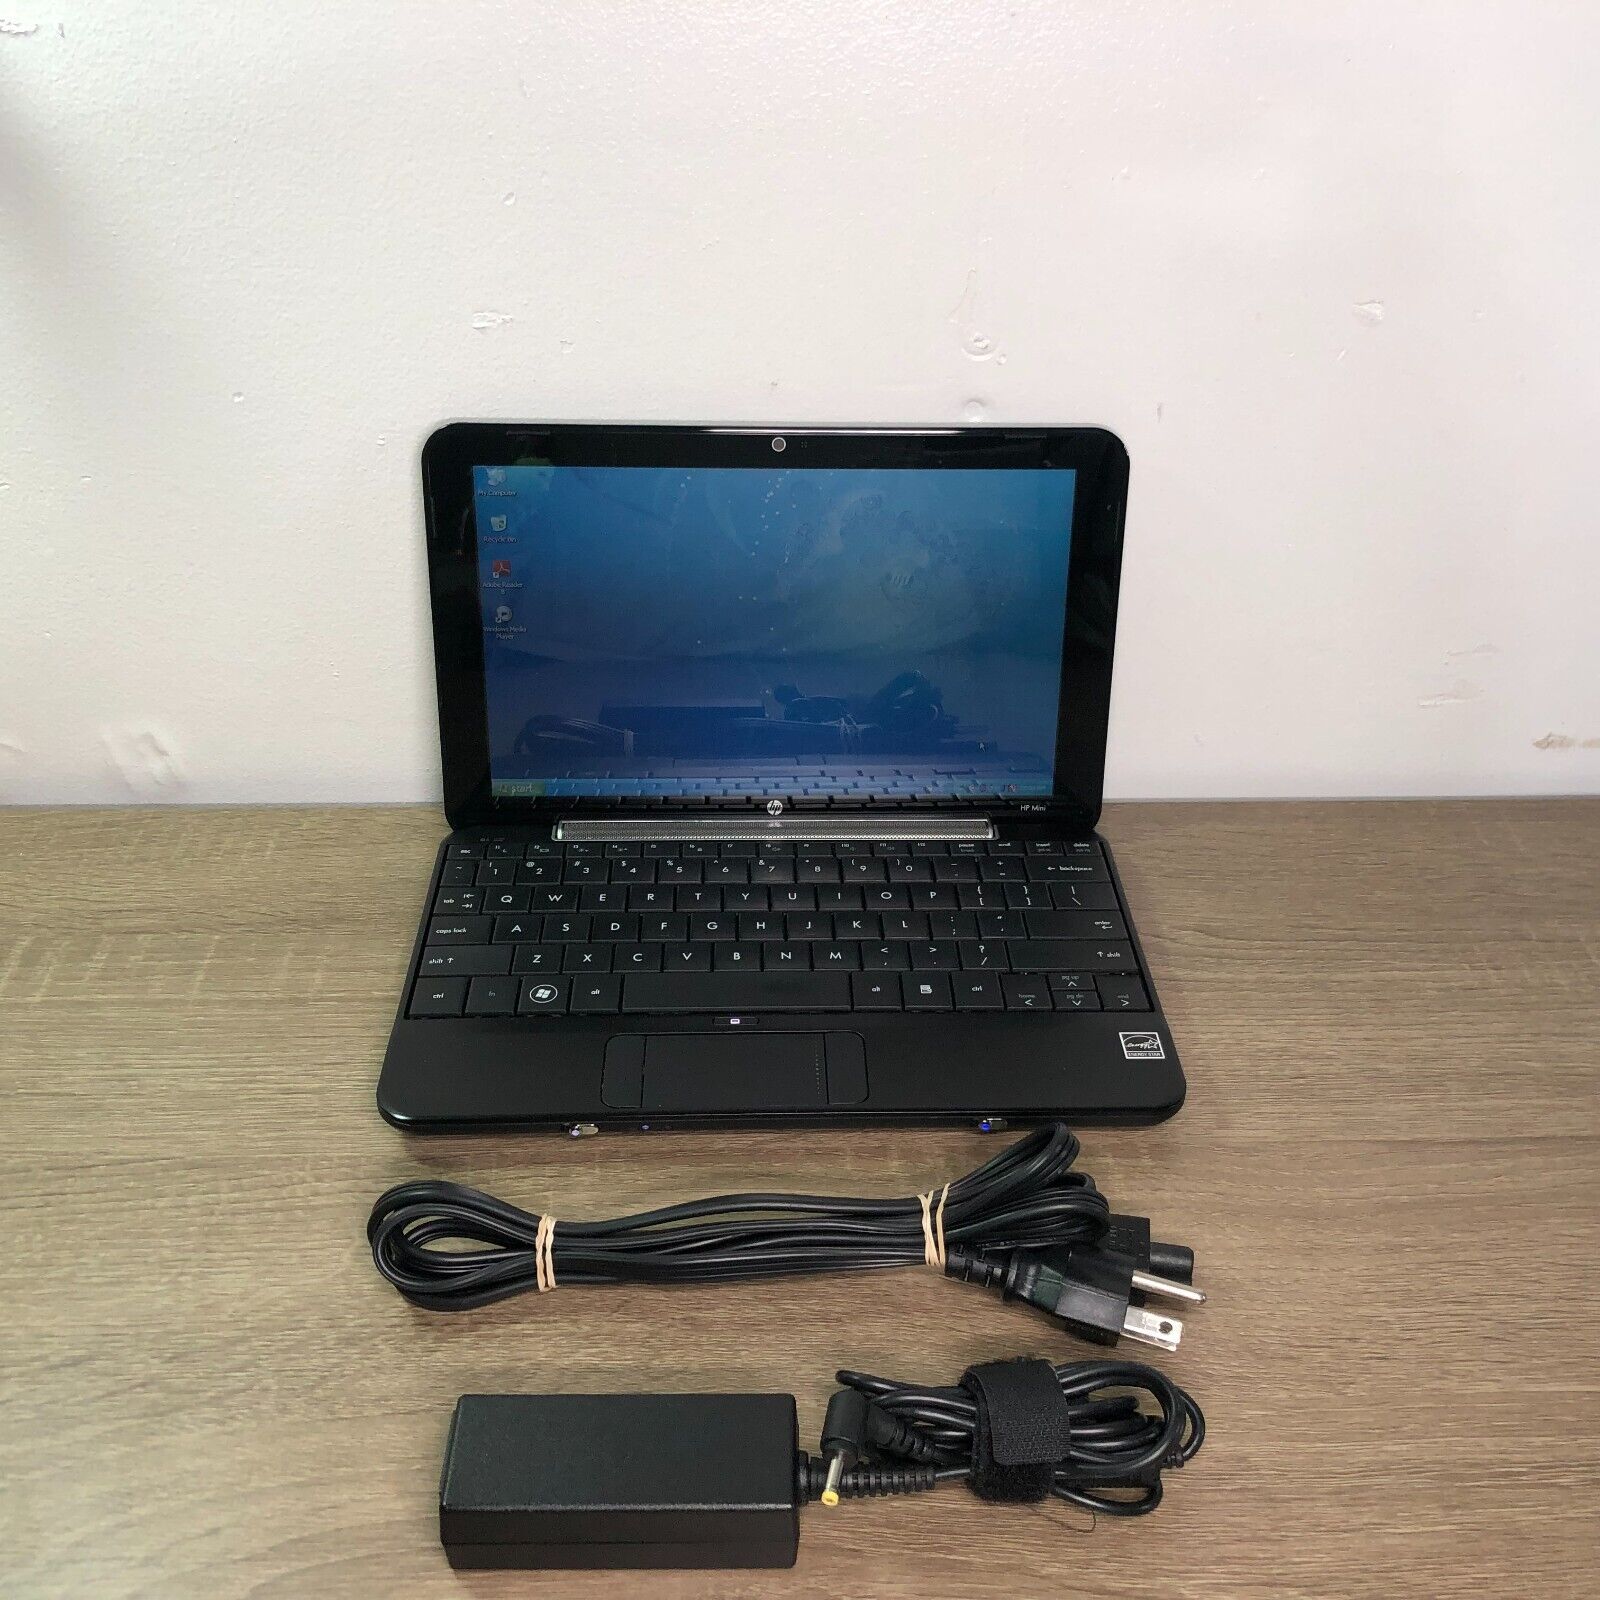 Hp Mini 1000 Laptop Windows XP Netbook Unlocked Factory Reset Charger Works